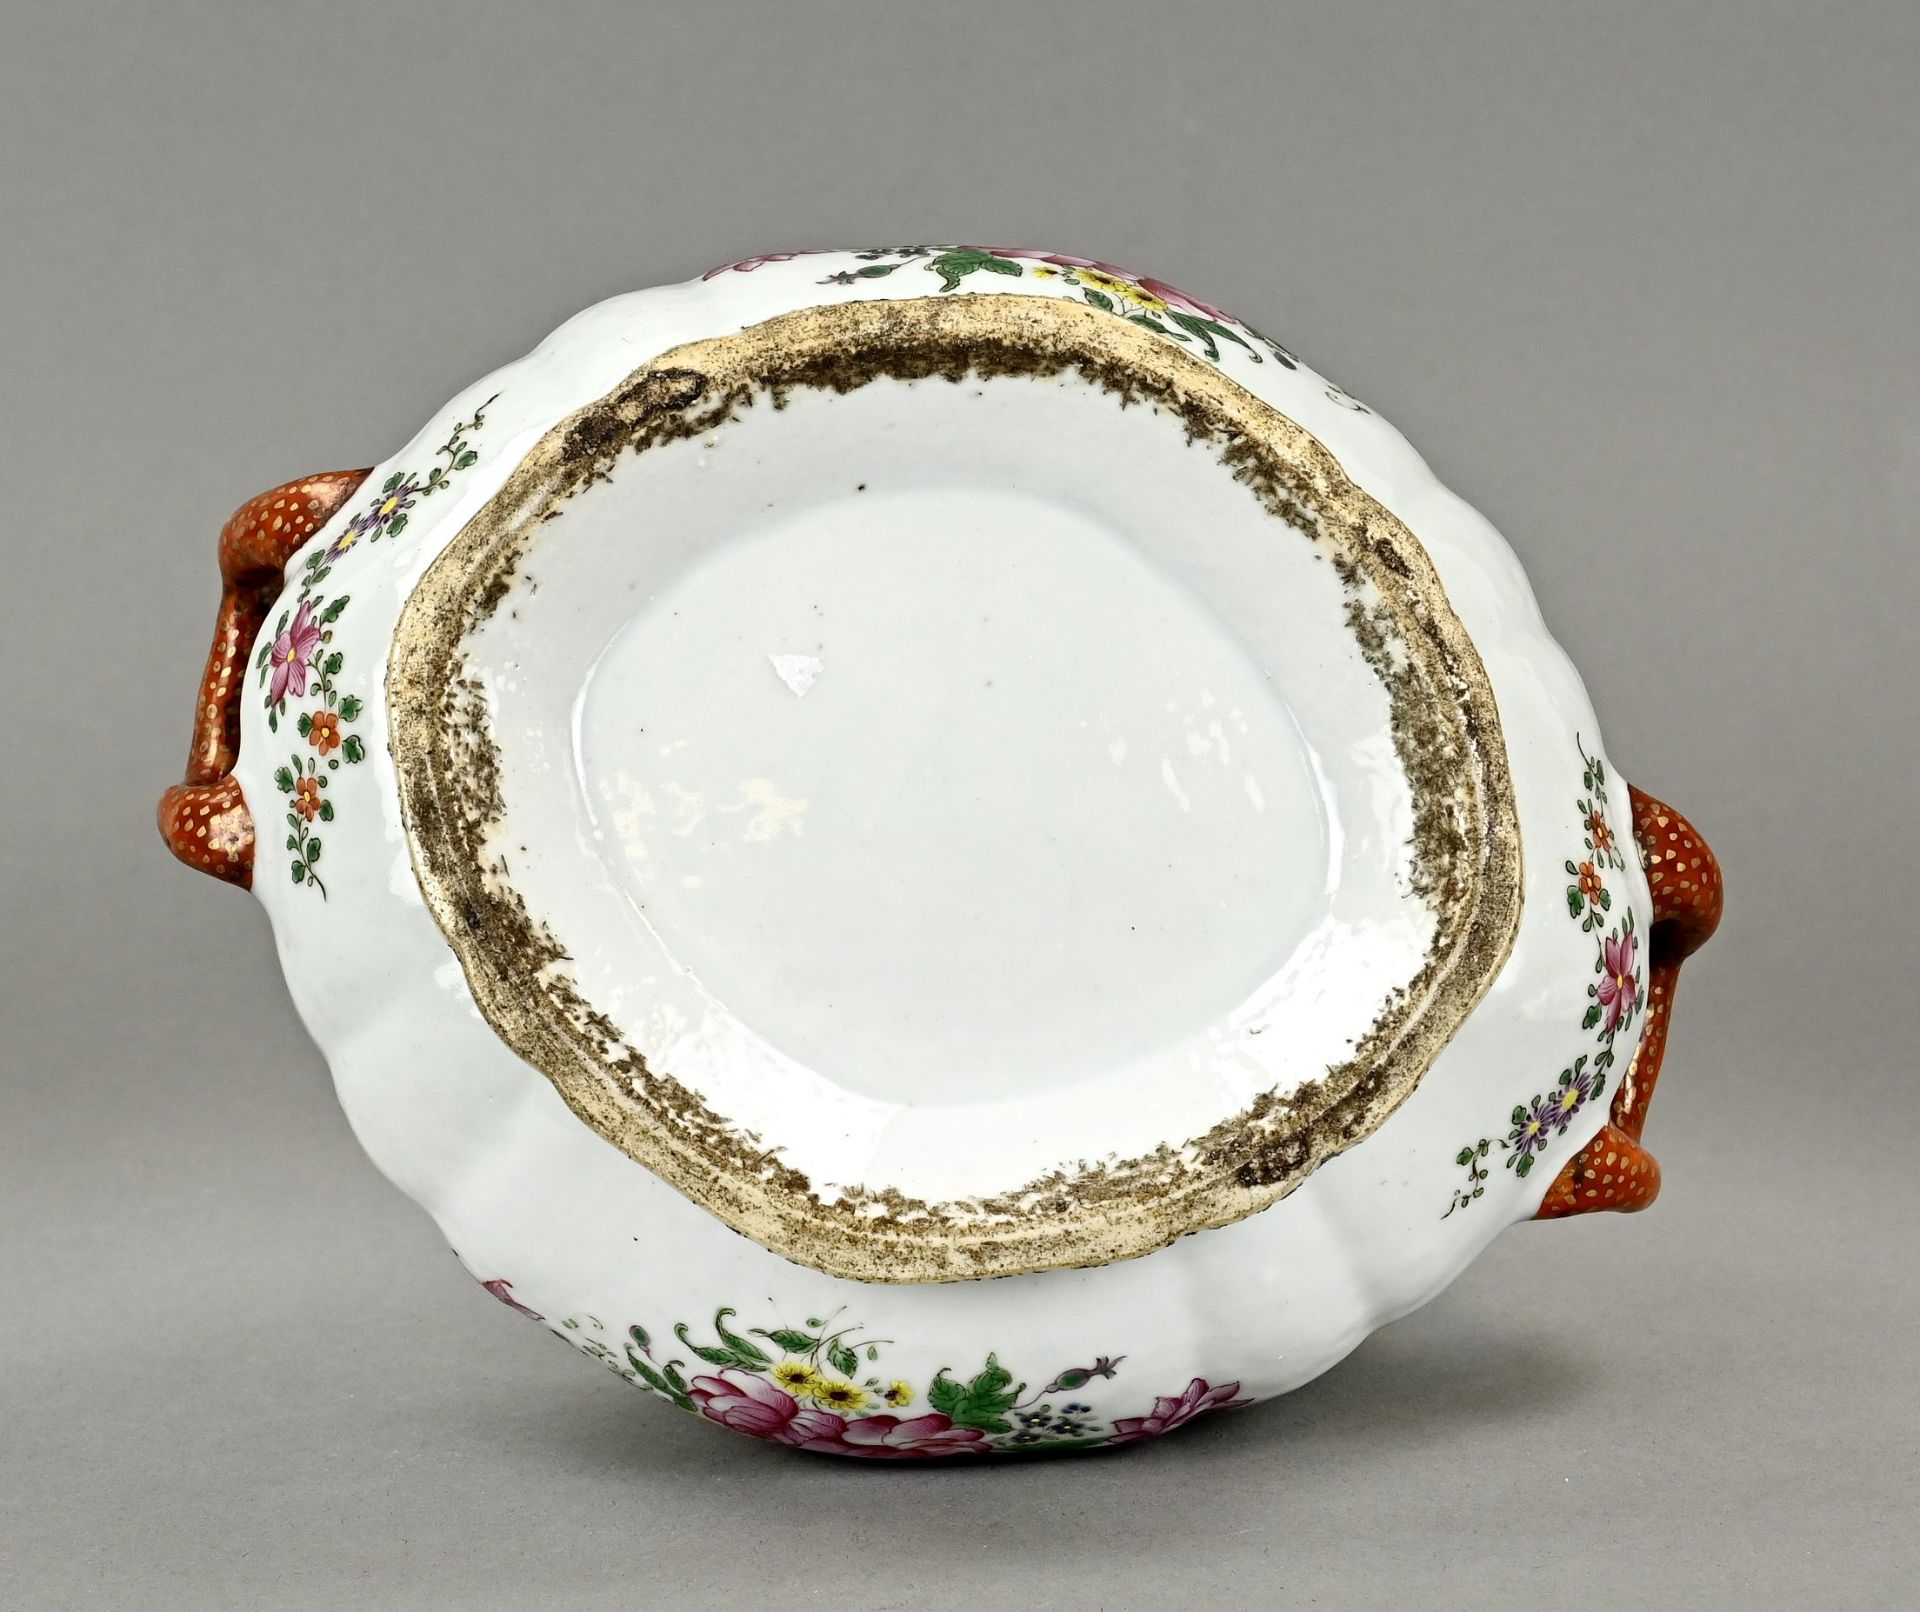 Chinese porcelain terrine - Image 2 of 2